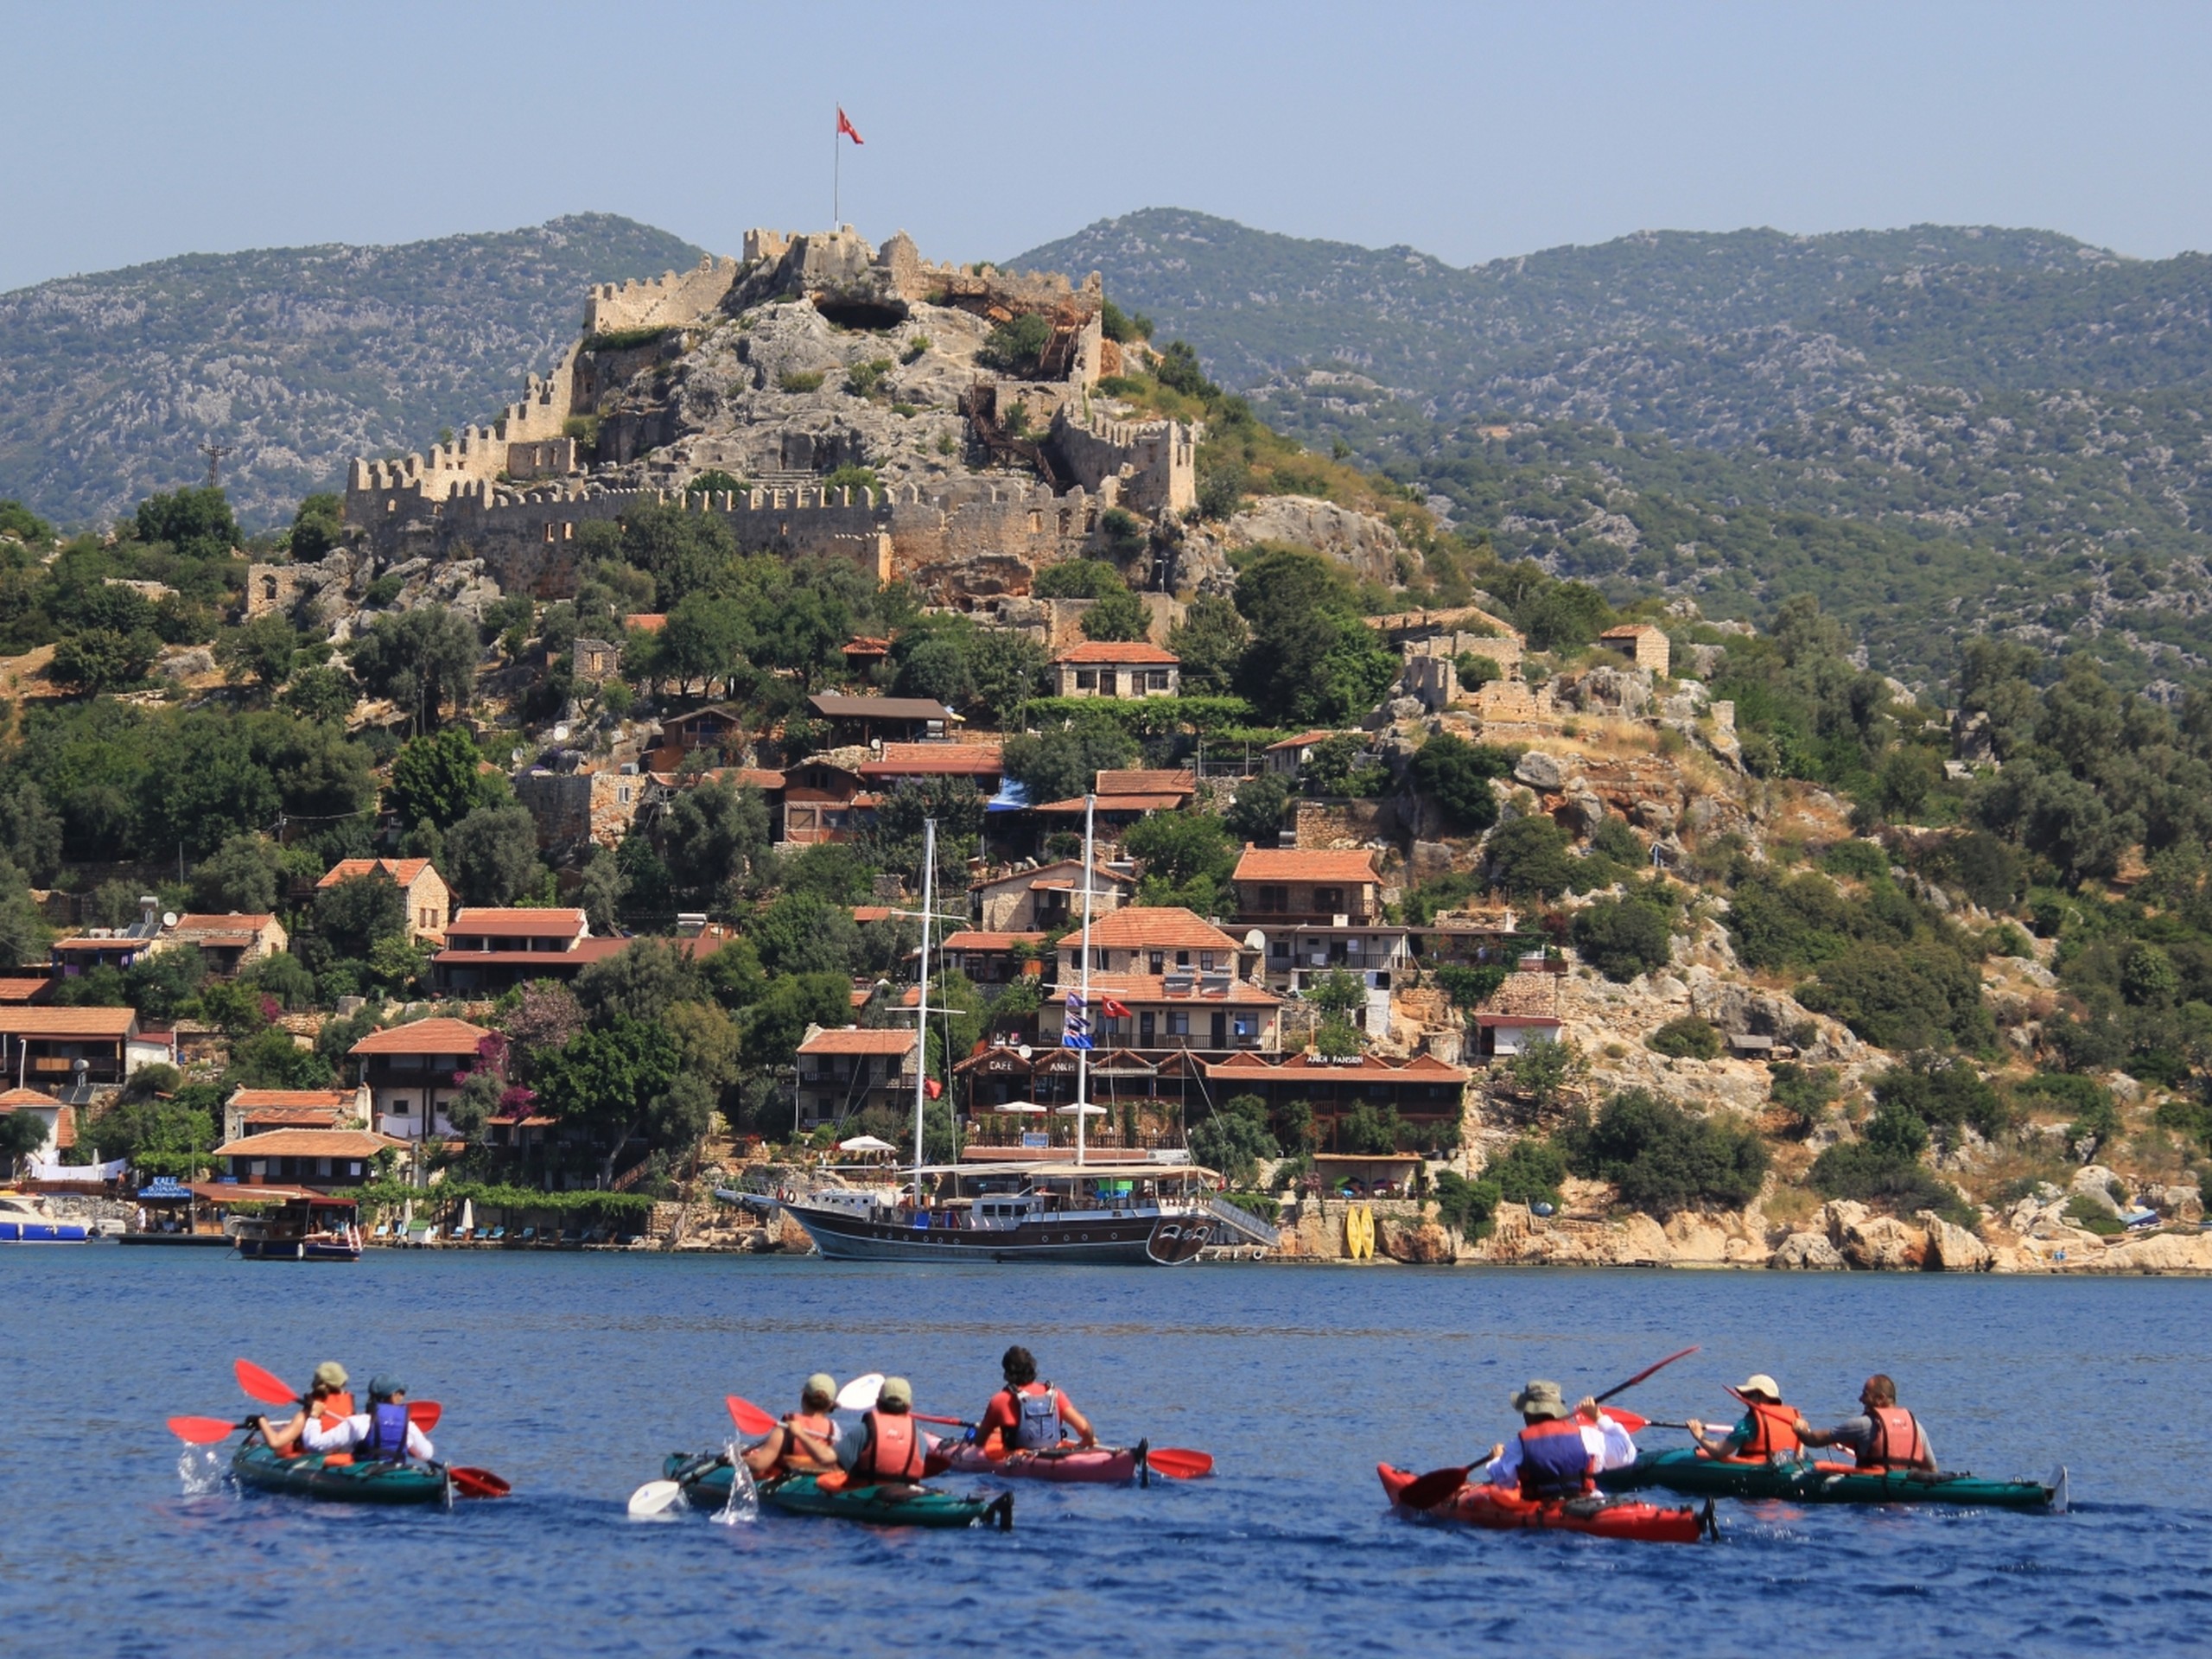 Group of Kayakers enjoying the views of Lycian coast